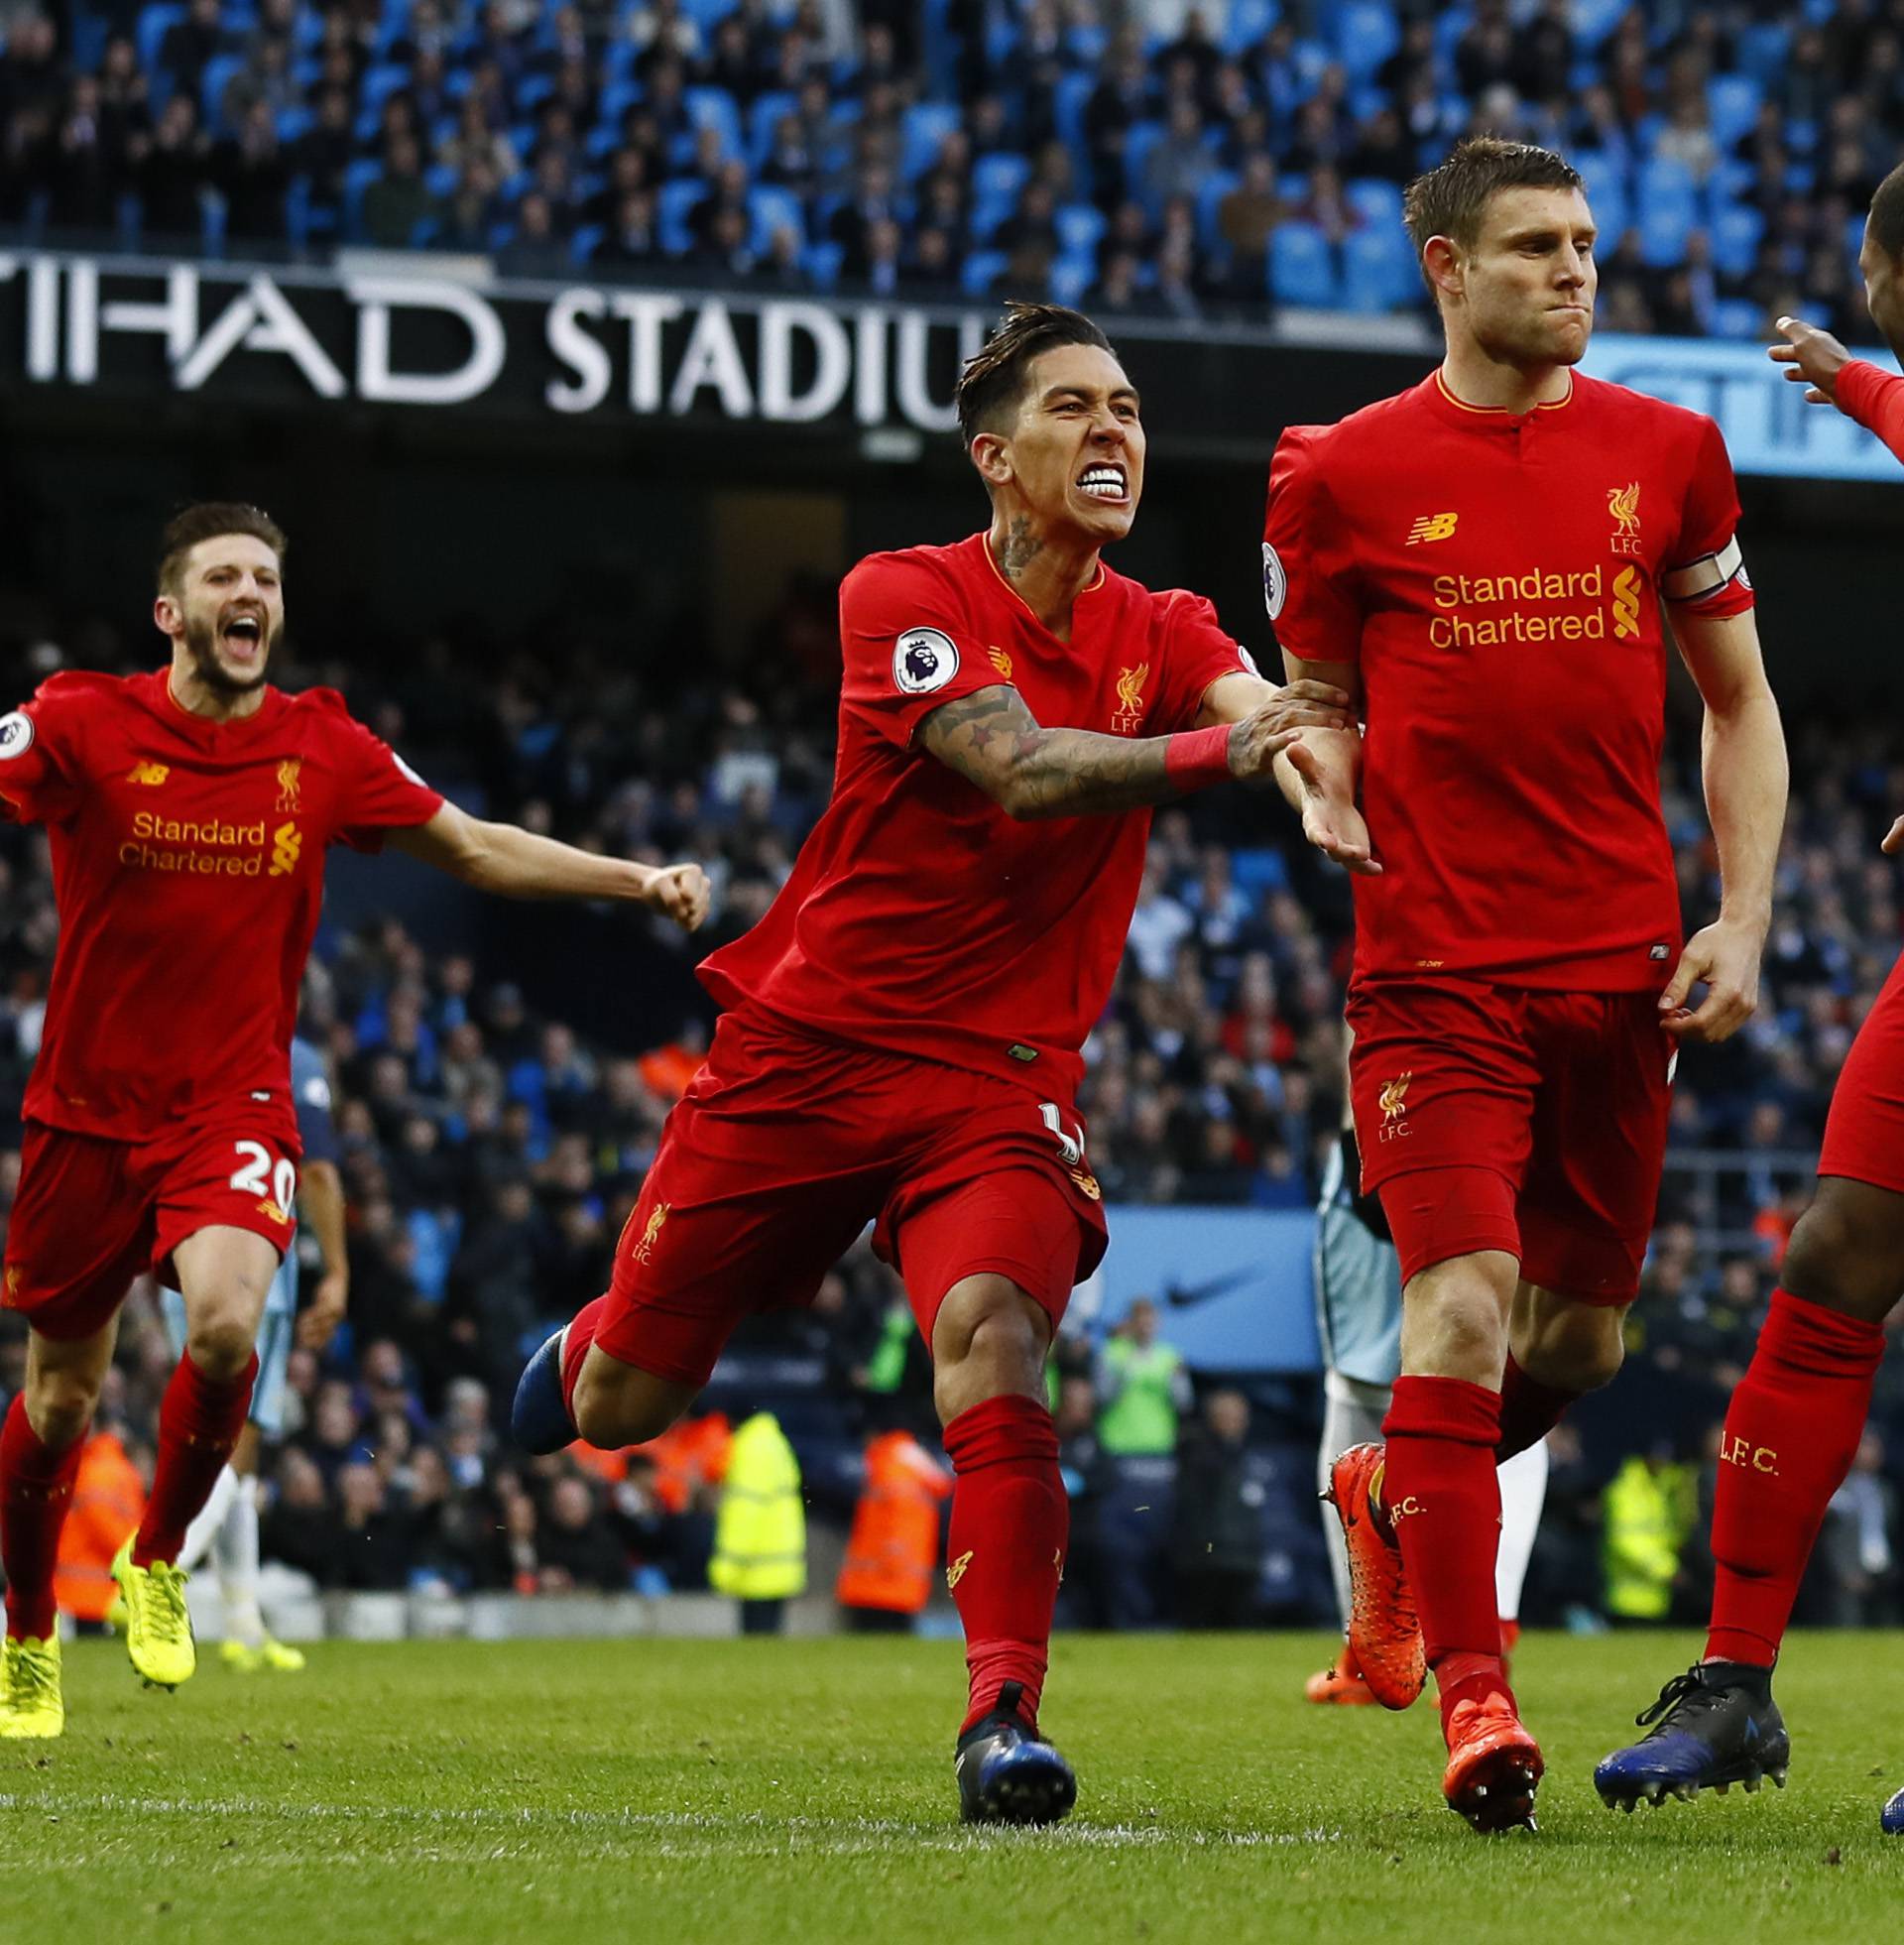 Liverpool's James Milner celebrates scoring their first goal with team mates